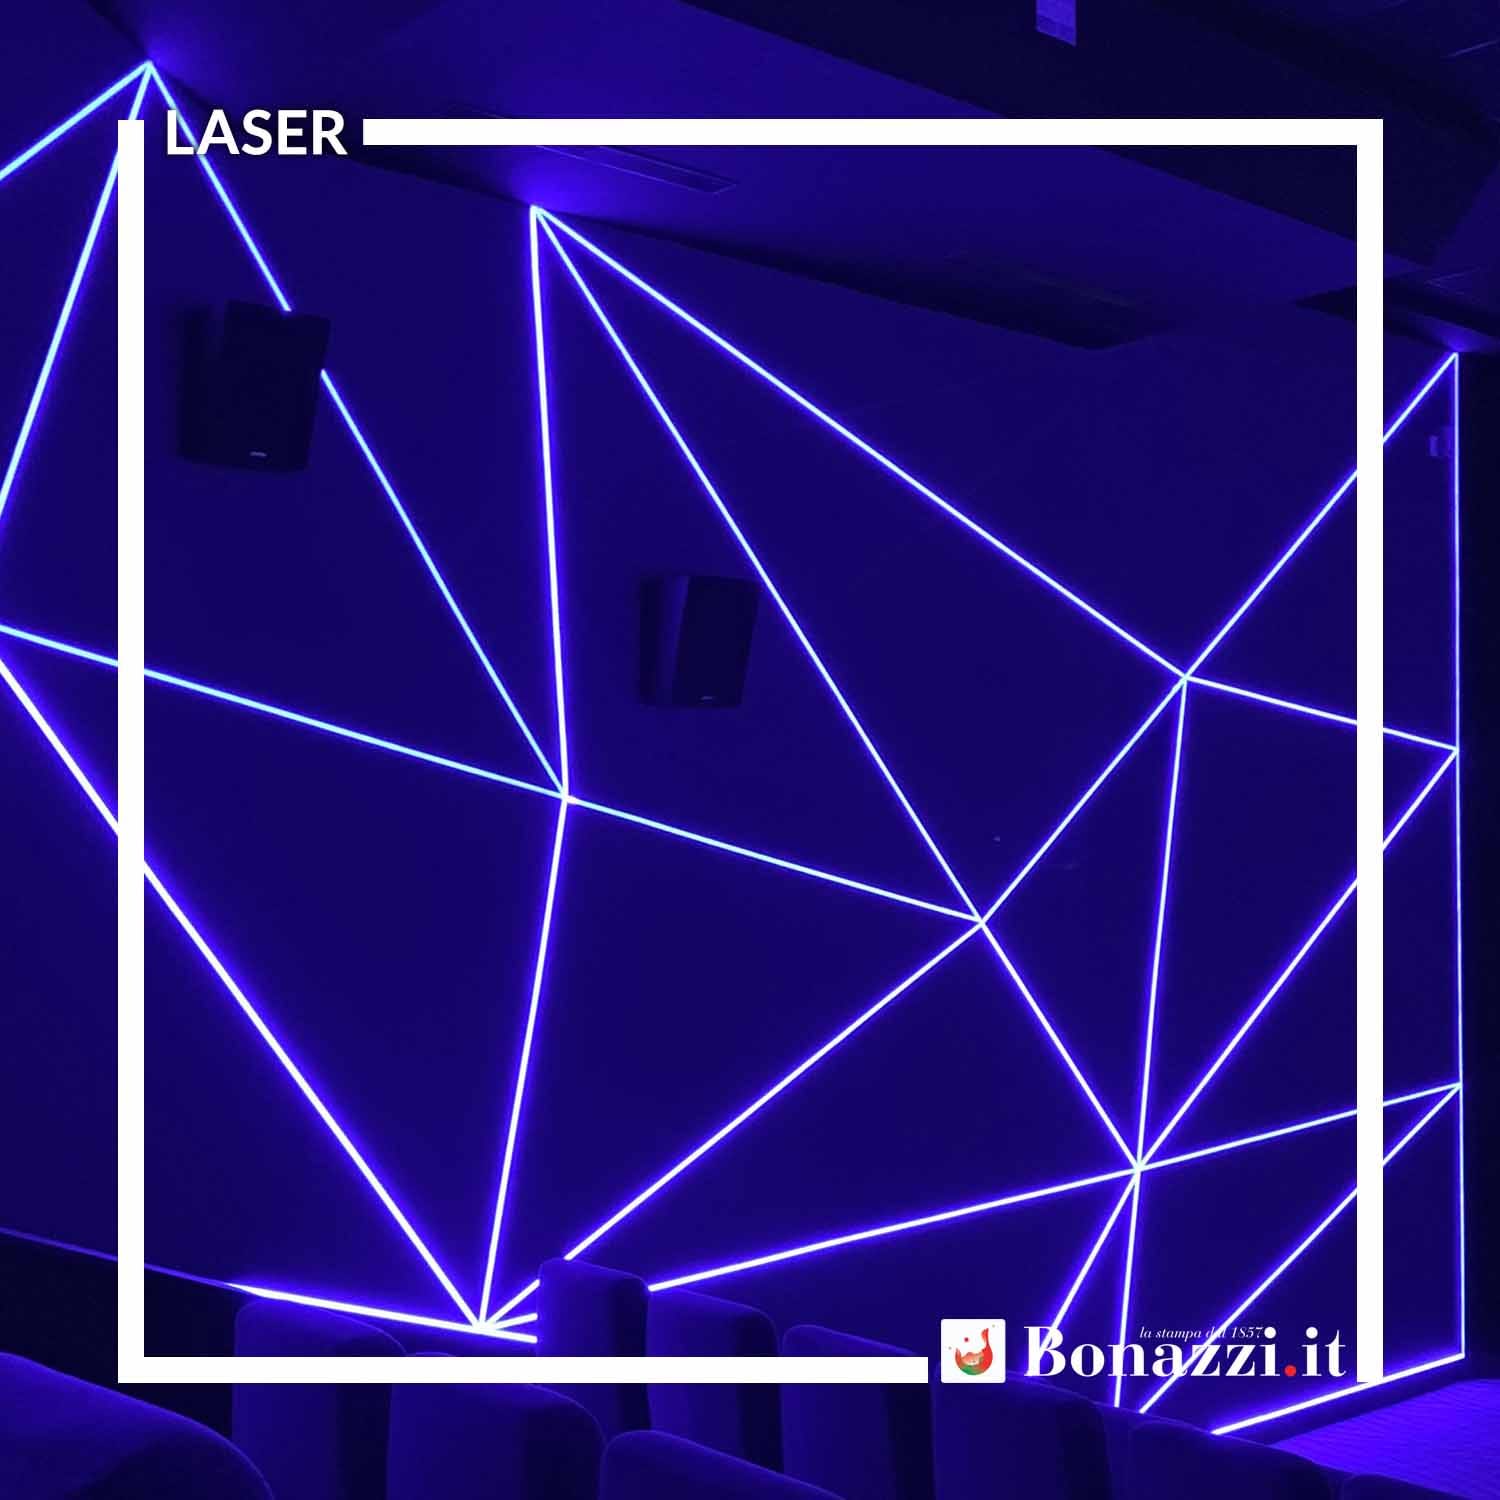 GLOSSARIO_Laser